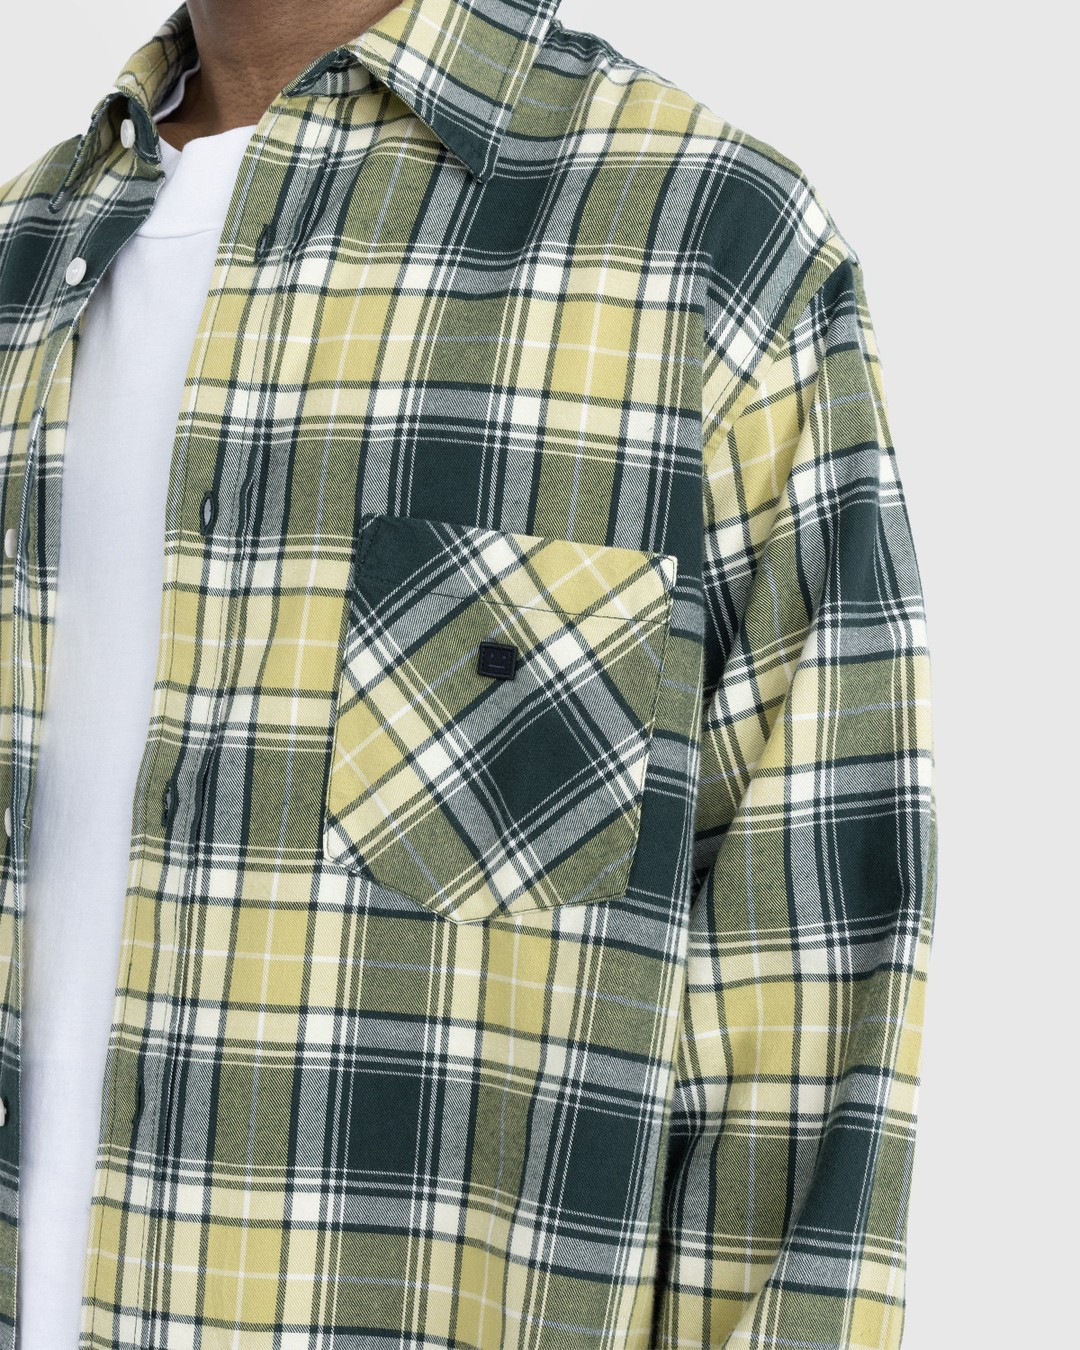 Acne Studios – Check Button-Up Shirt Forest Green/Light Green - Shirts - Green - Image 4